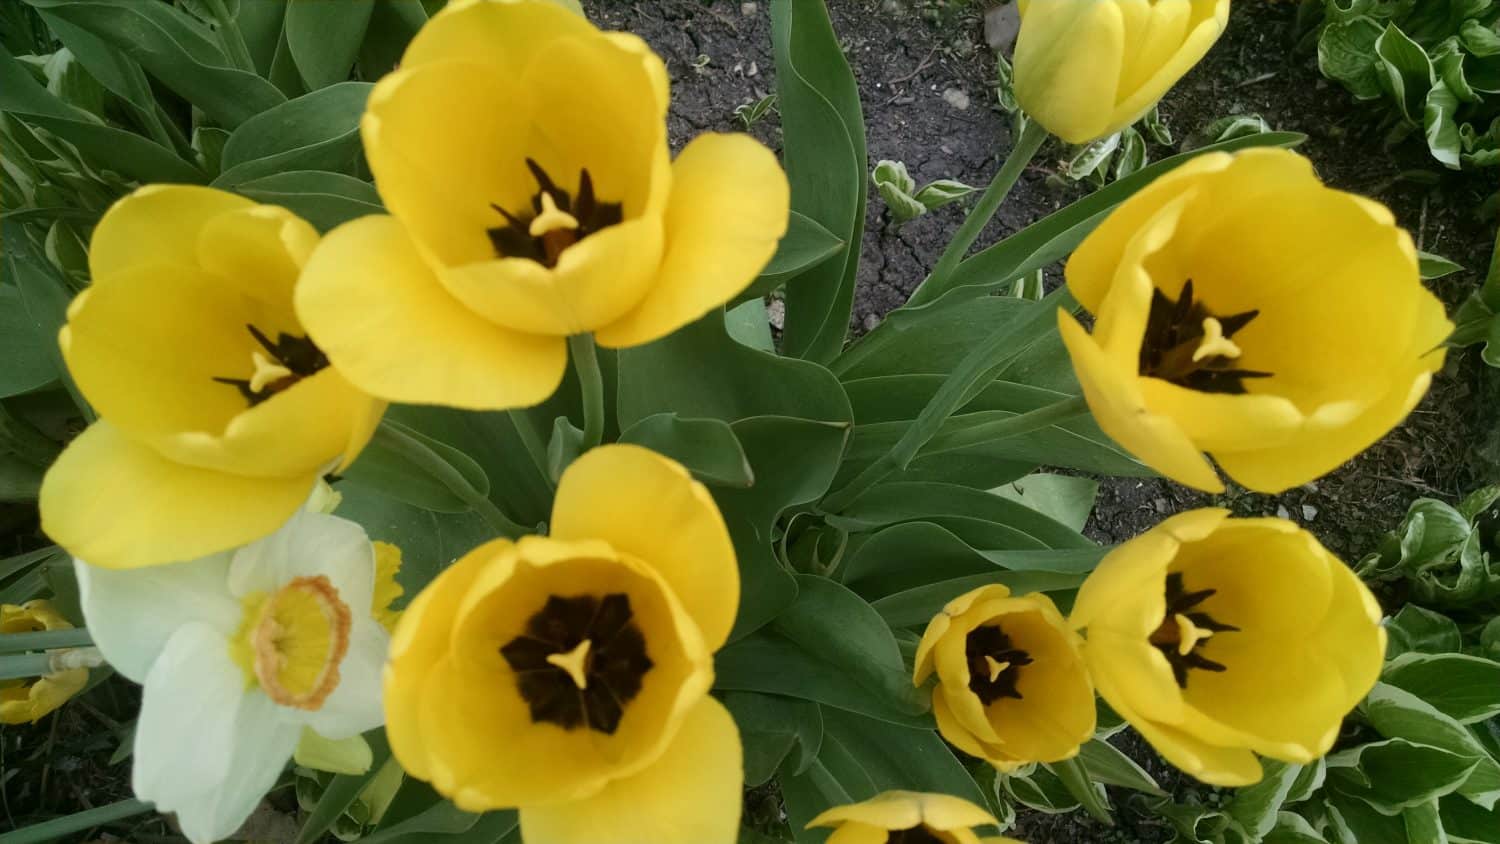 Tulips & Daffodils #3